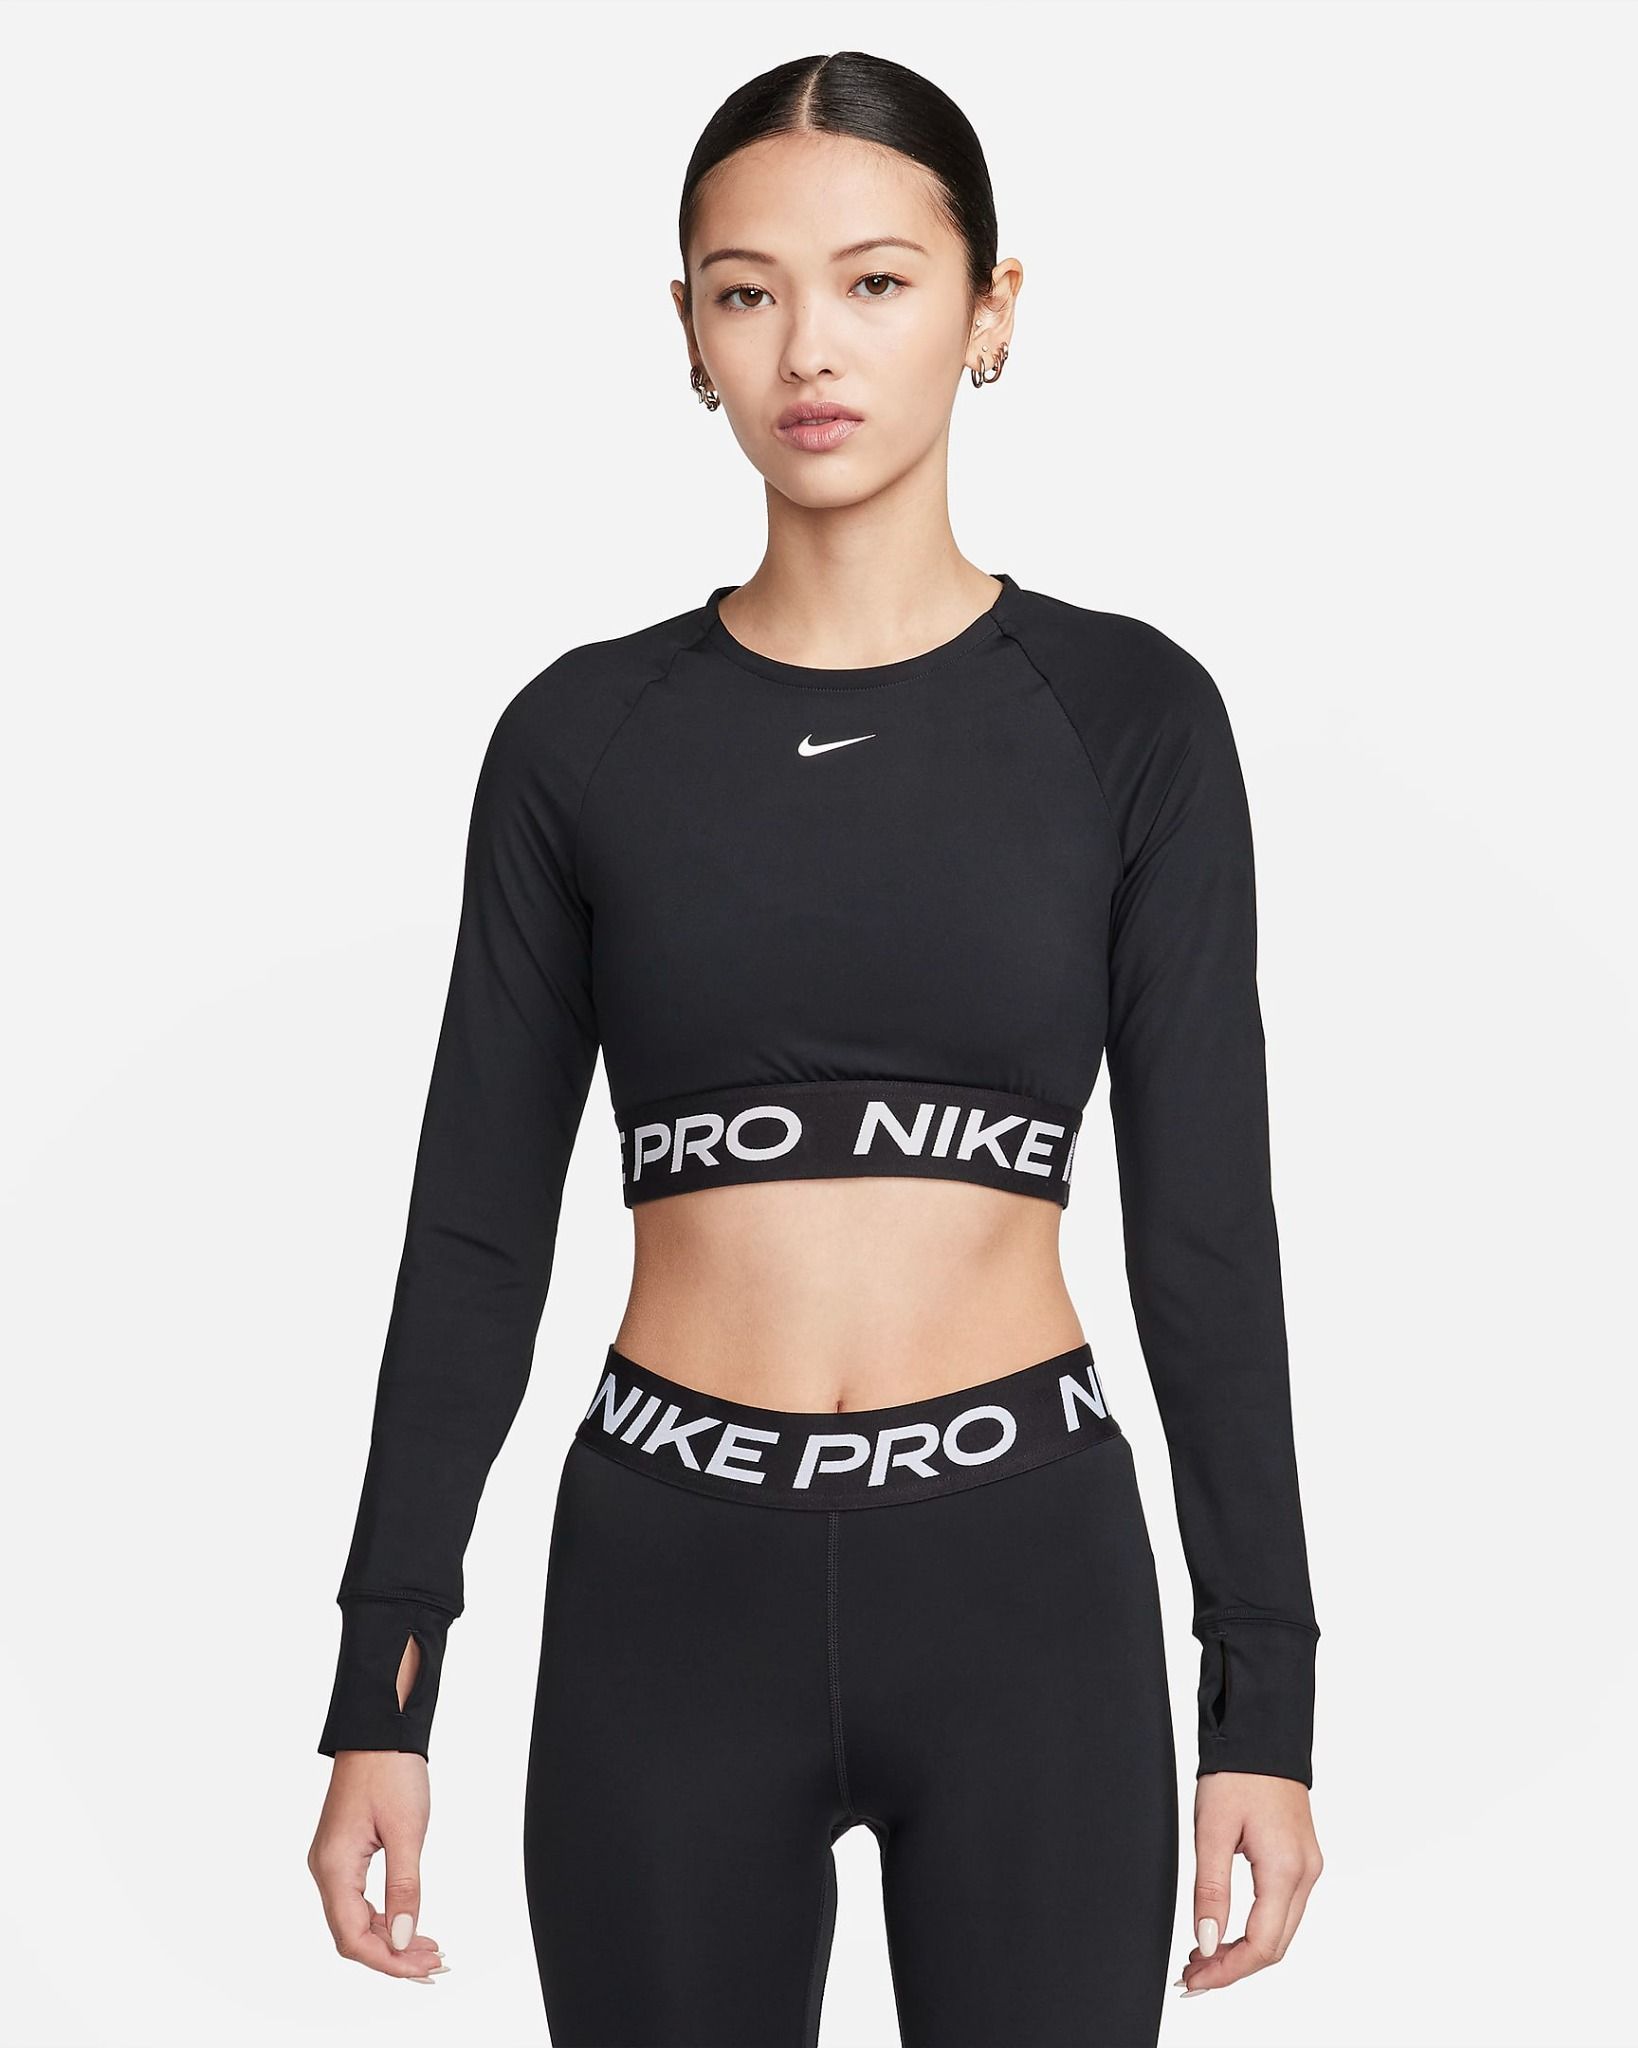 Nike - Áo tay dài thể thao Nữ Pro 365 Women's Dri-FIT Cropped Long-Sleeve Top